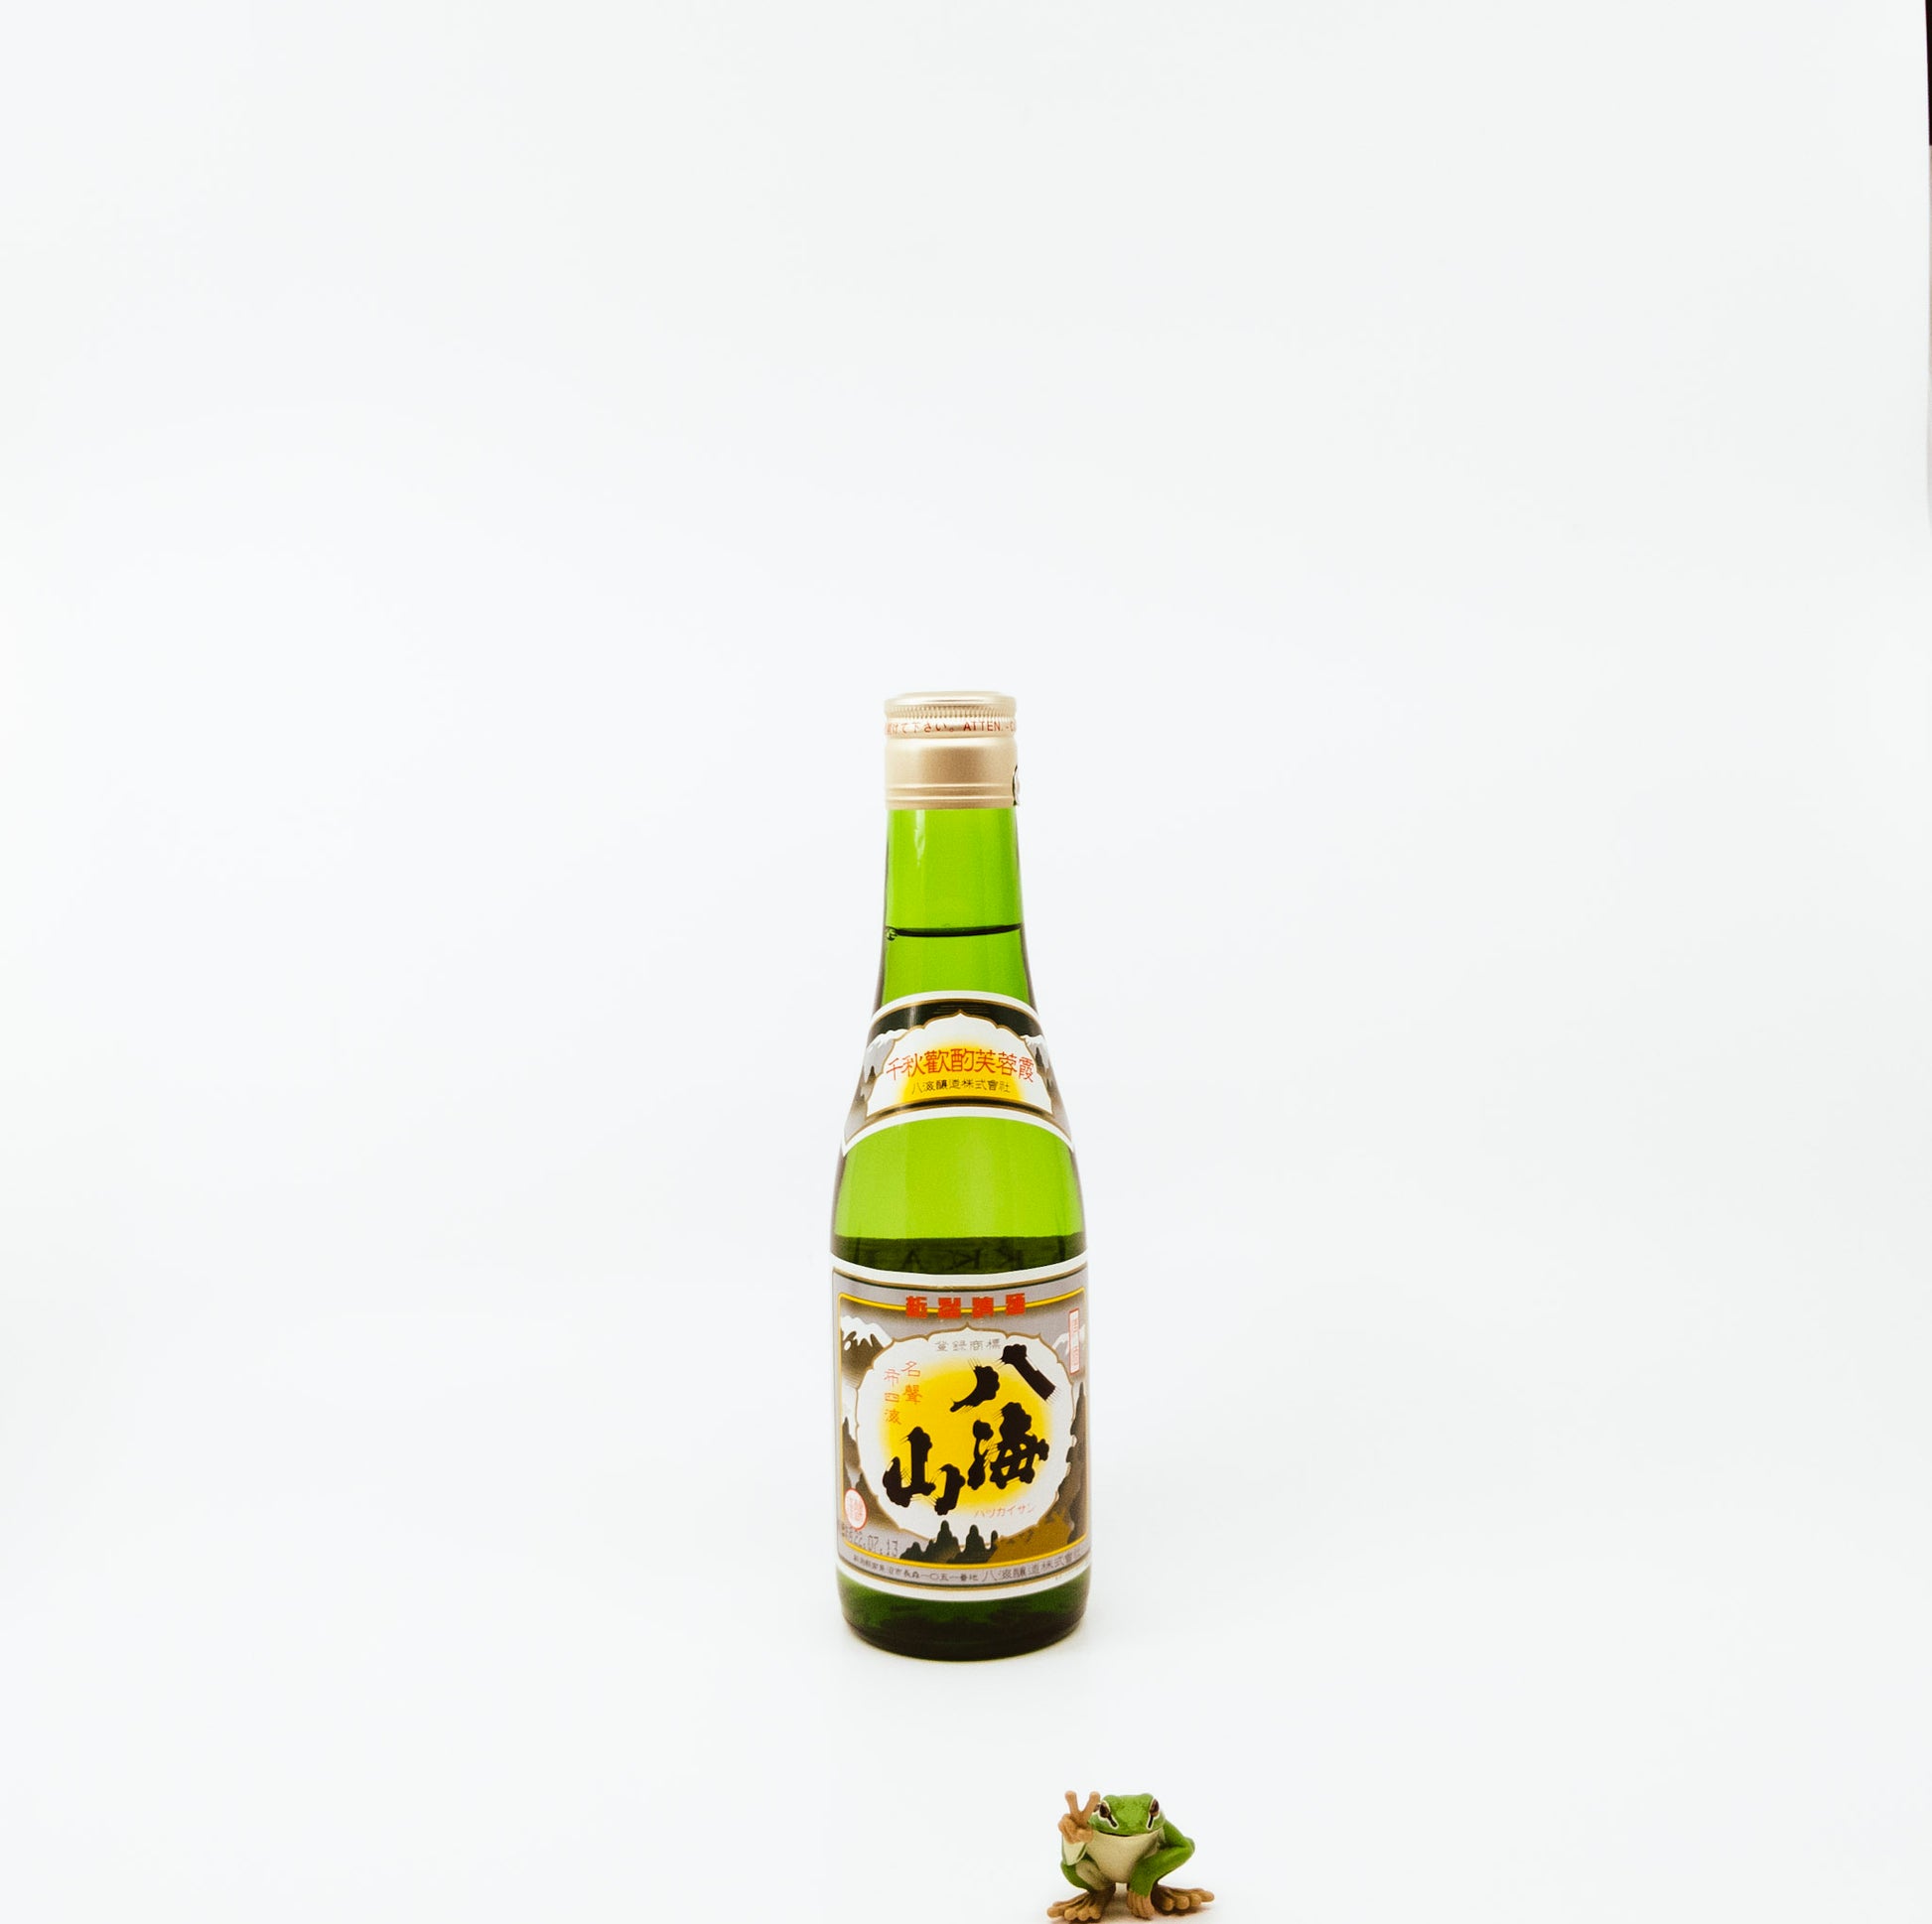 short green bottle next to frog figurine